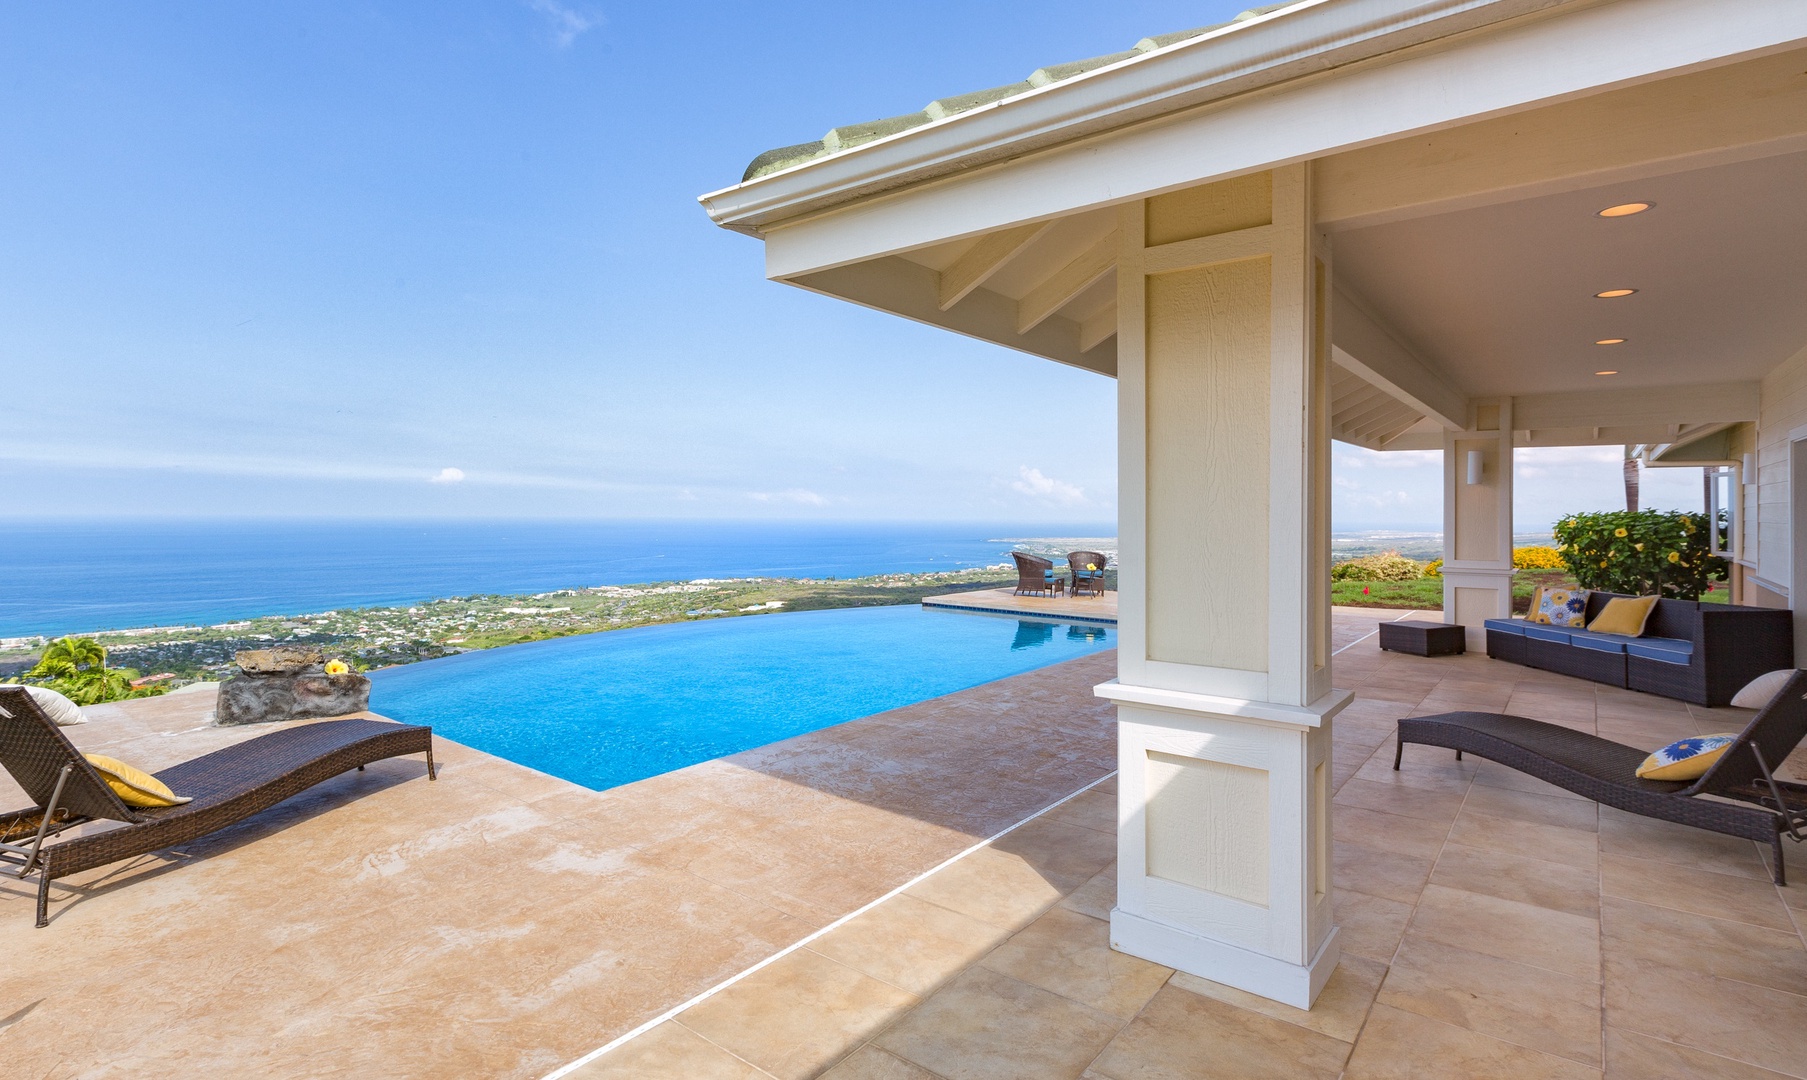 Kailua Kona Vacation Rentals, Hale Maluhia (Big Island) - Stunning Ocean views from the private infinity pool